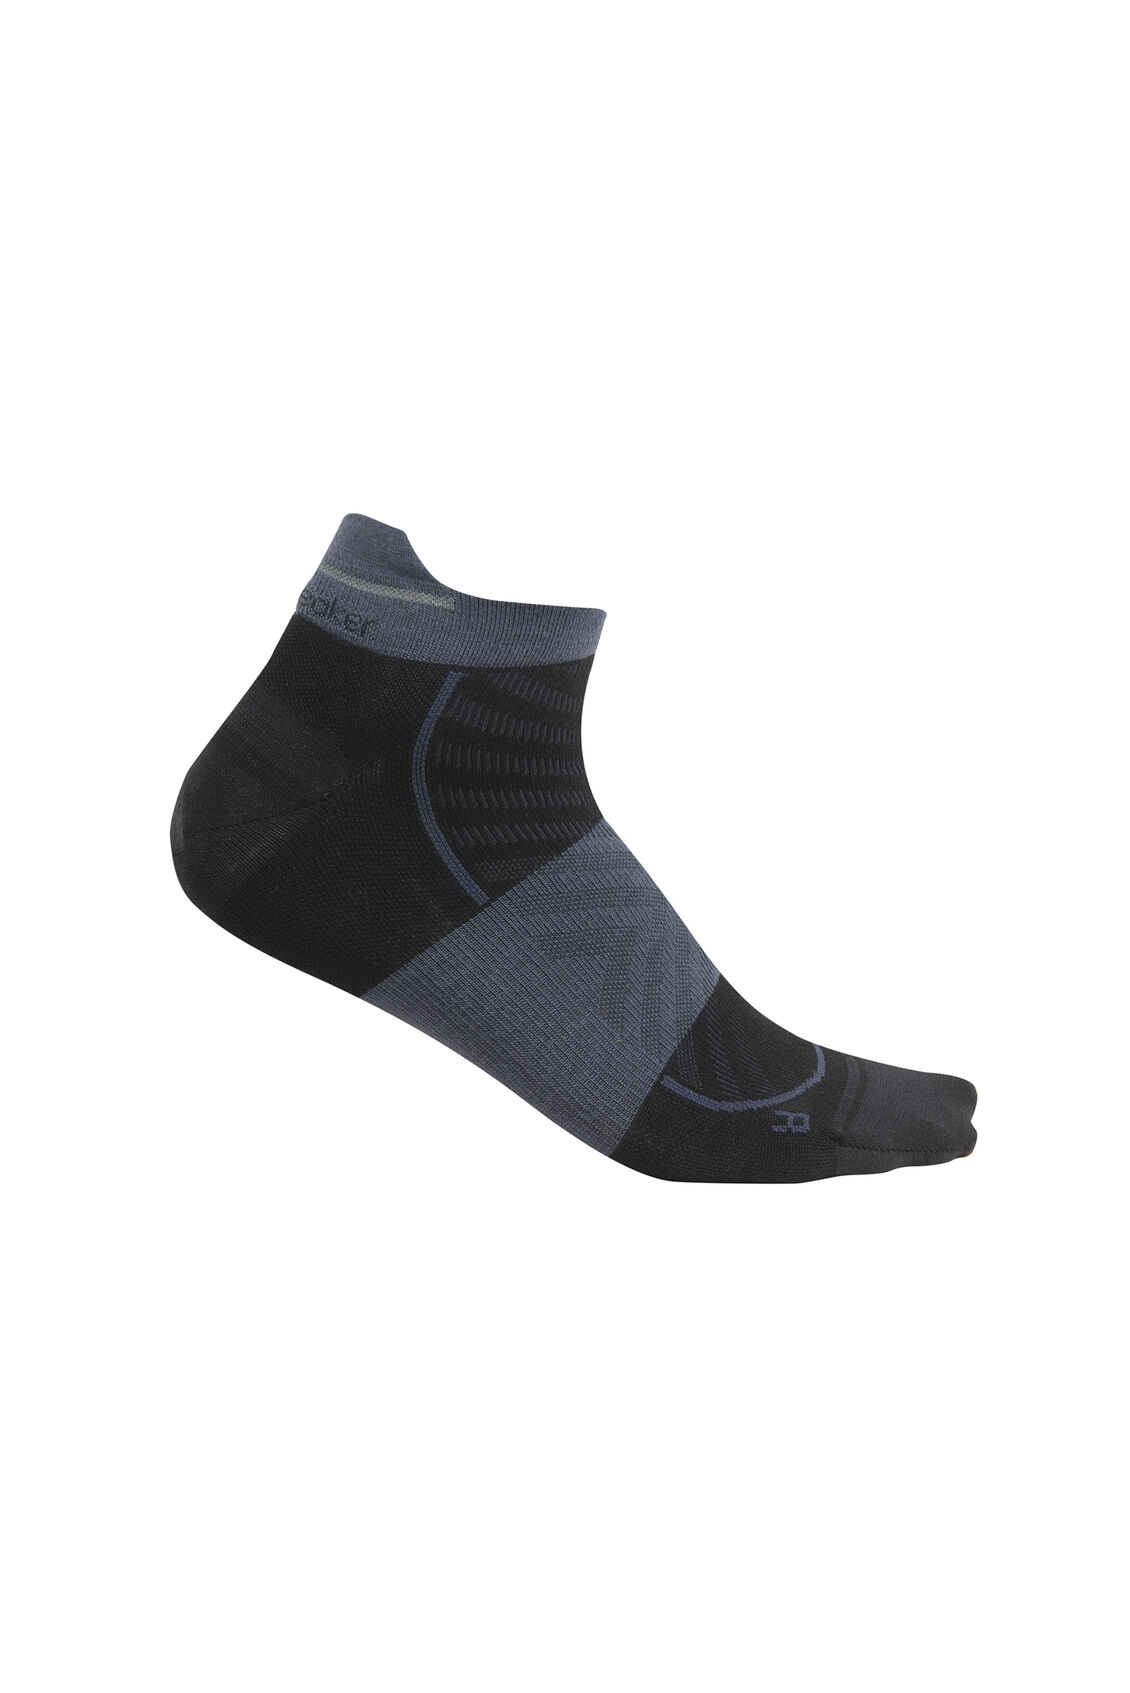 Icebreaker Merino Blend Run+ Ultralight Micro Socks (Men's) - Black/Graphite - Find Your Feet Australia Hobart Launceston Tasmania